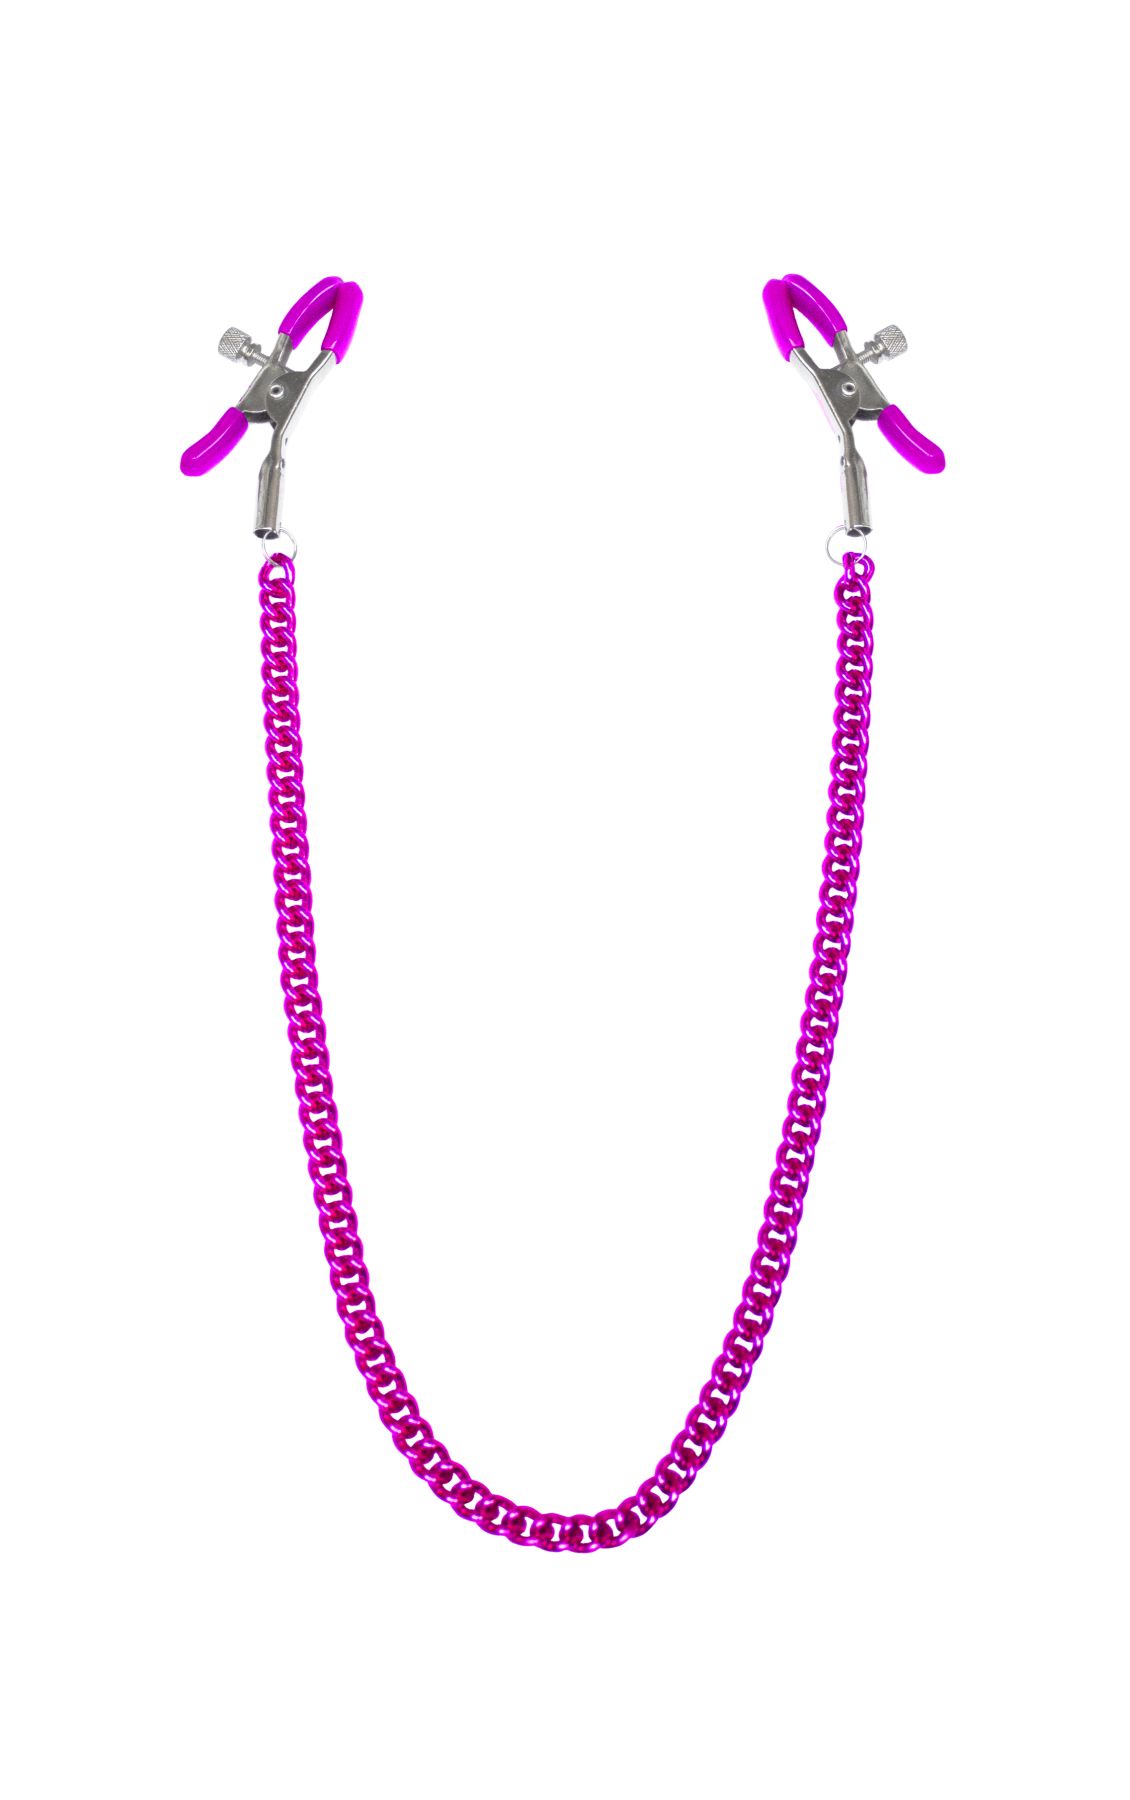 За�жимы для сосков с цепочкой Feral Feelings - Nipple clamps Classic, розовый